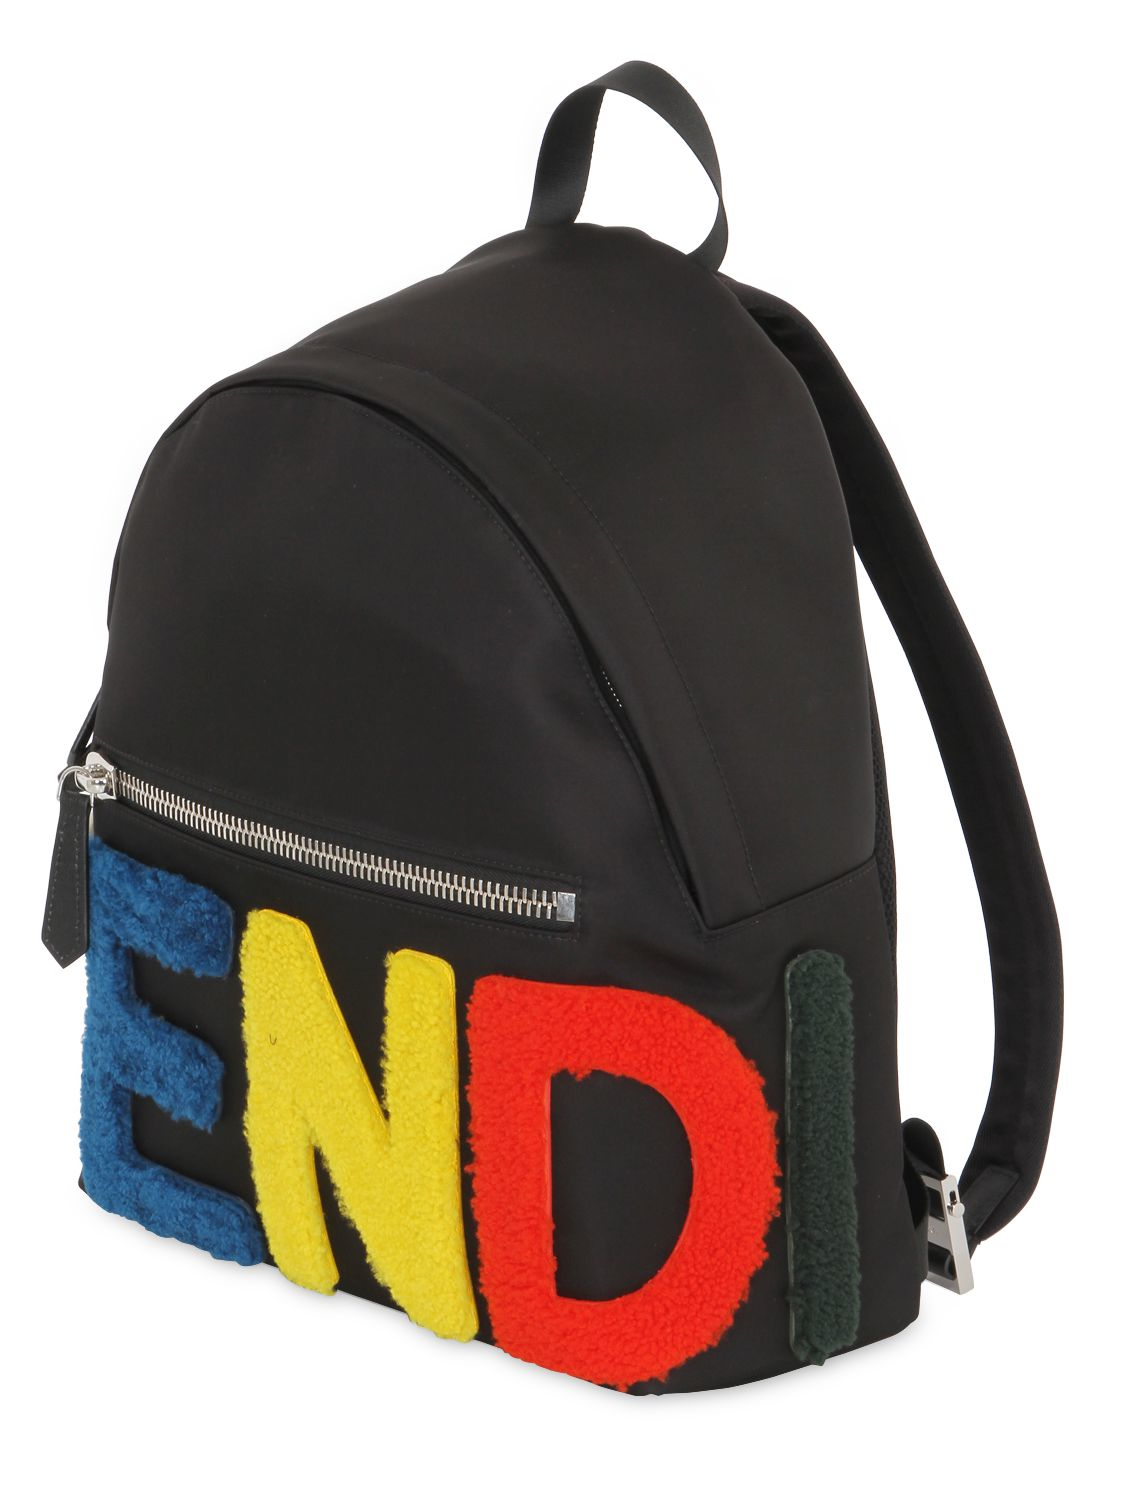 Fendi Logo Patches Nylon & Shearling Backpack in Black for Men - Lyst